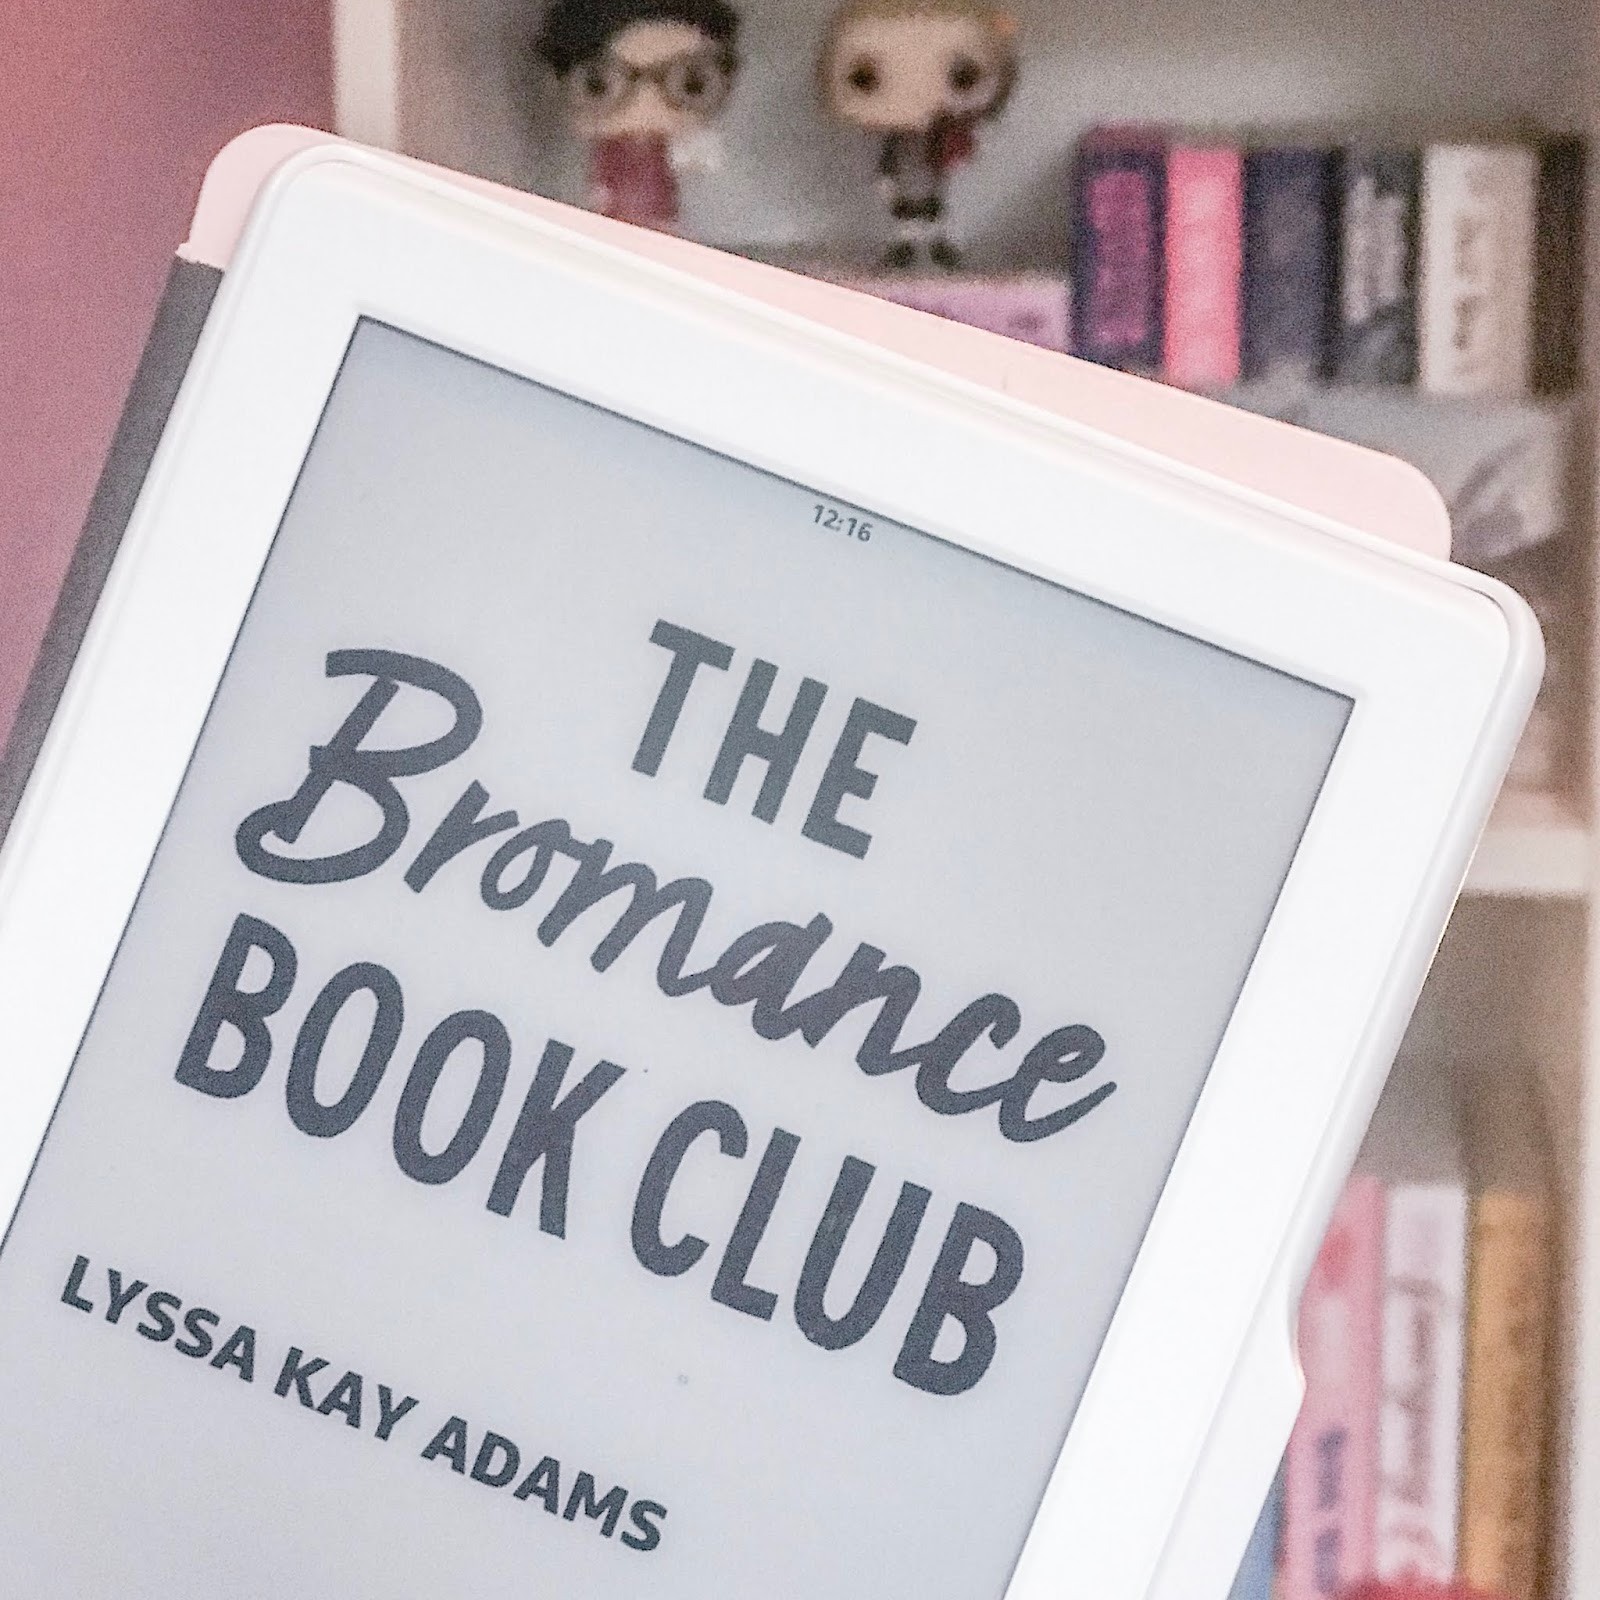 Get e-book The bromance book club Free